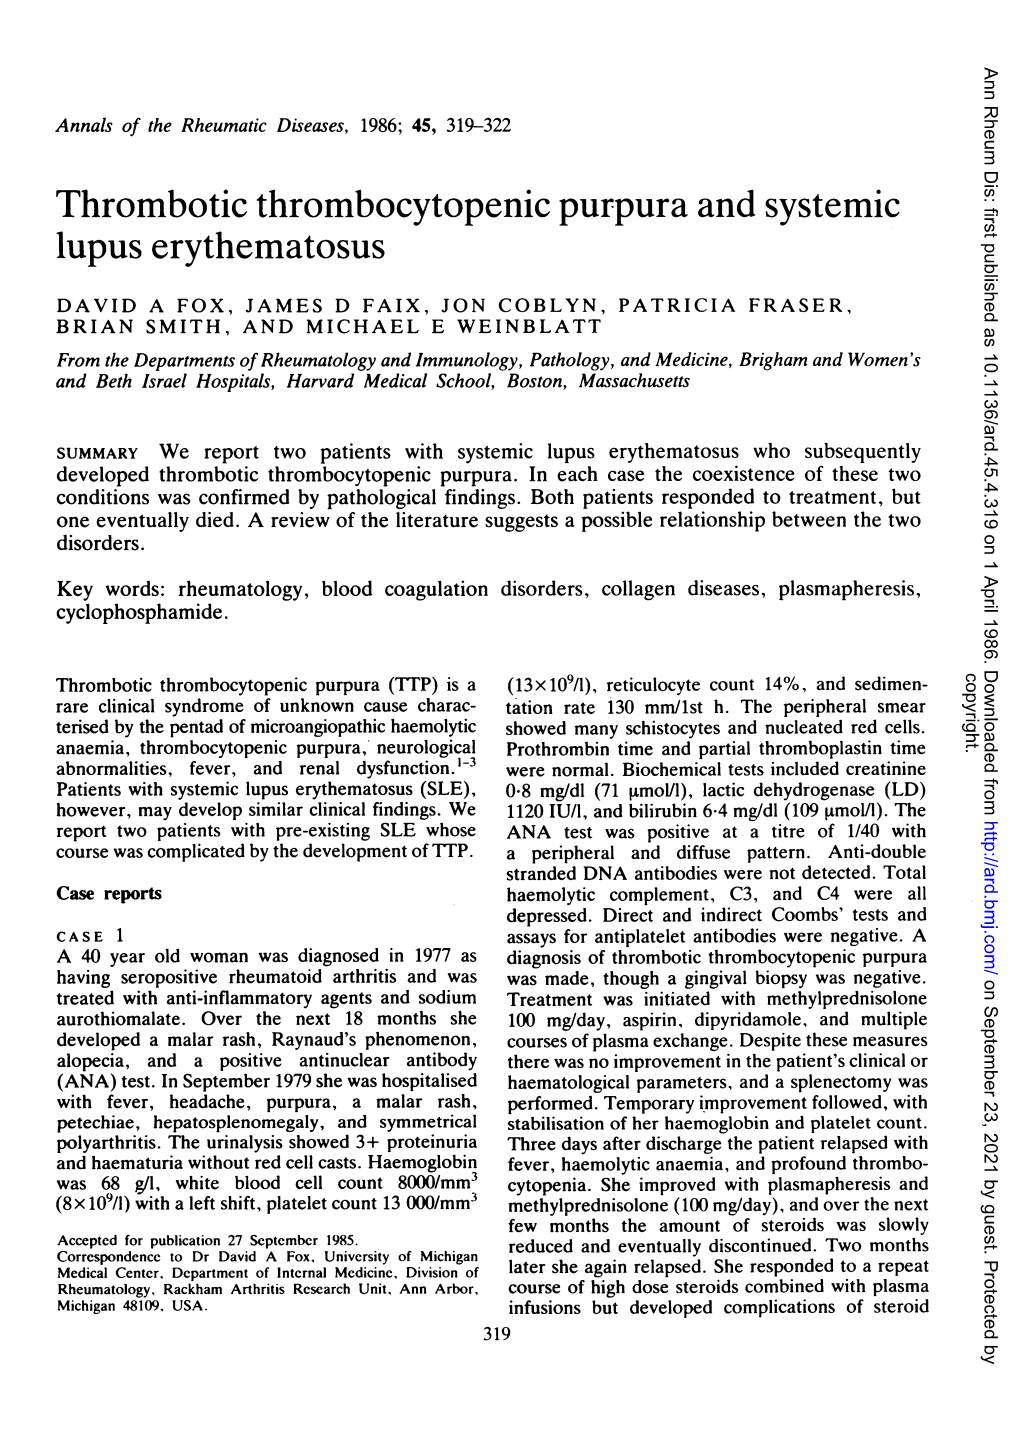 Thrombotic Thrombocytopenic Purpura and Systemic Lupus Erythematosus